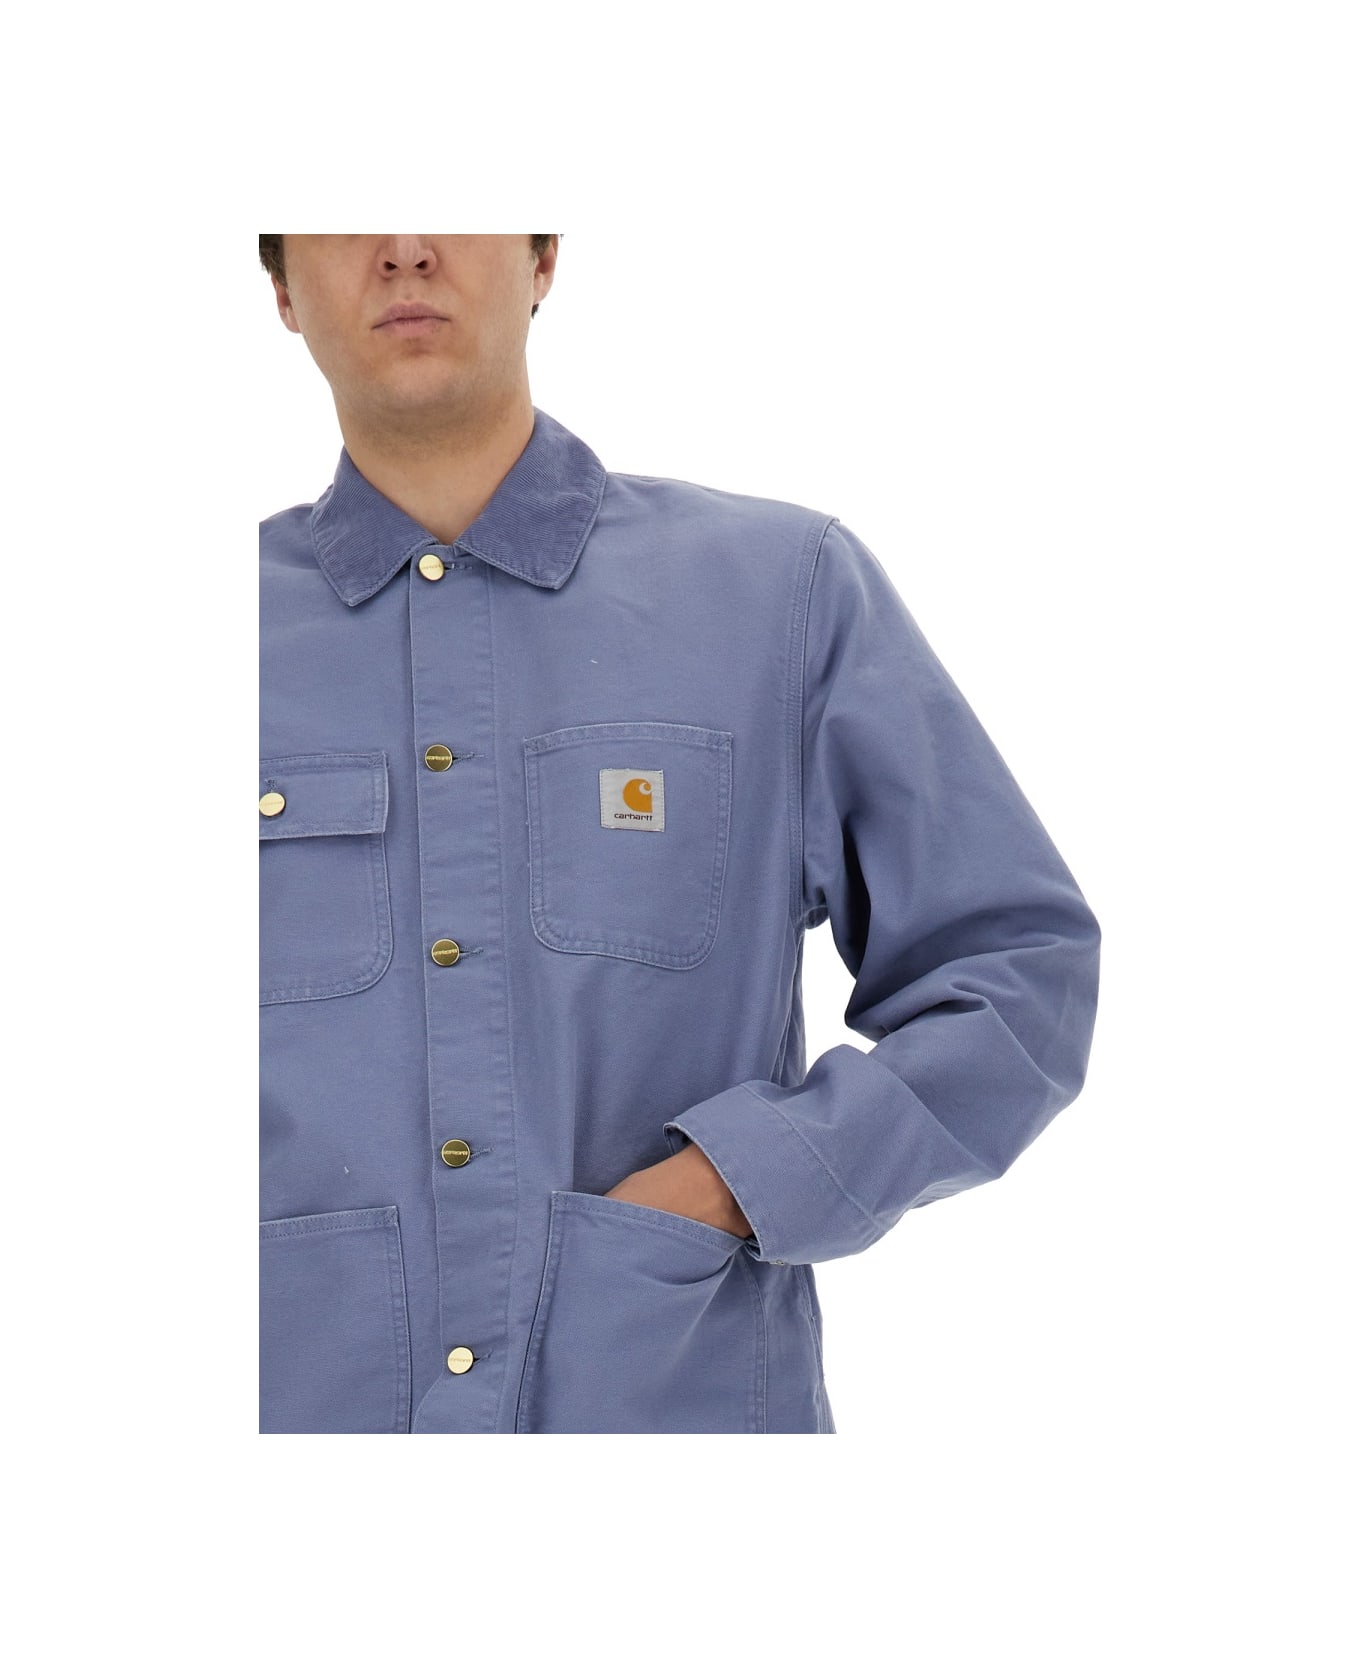 Carhartt Jacket "michigan" - BLUE